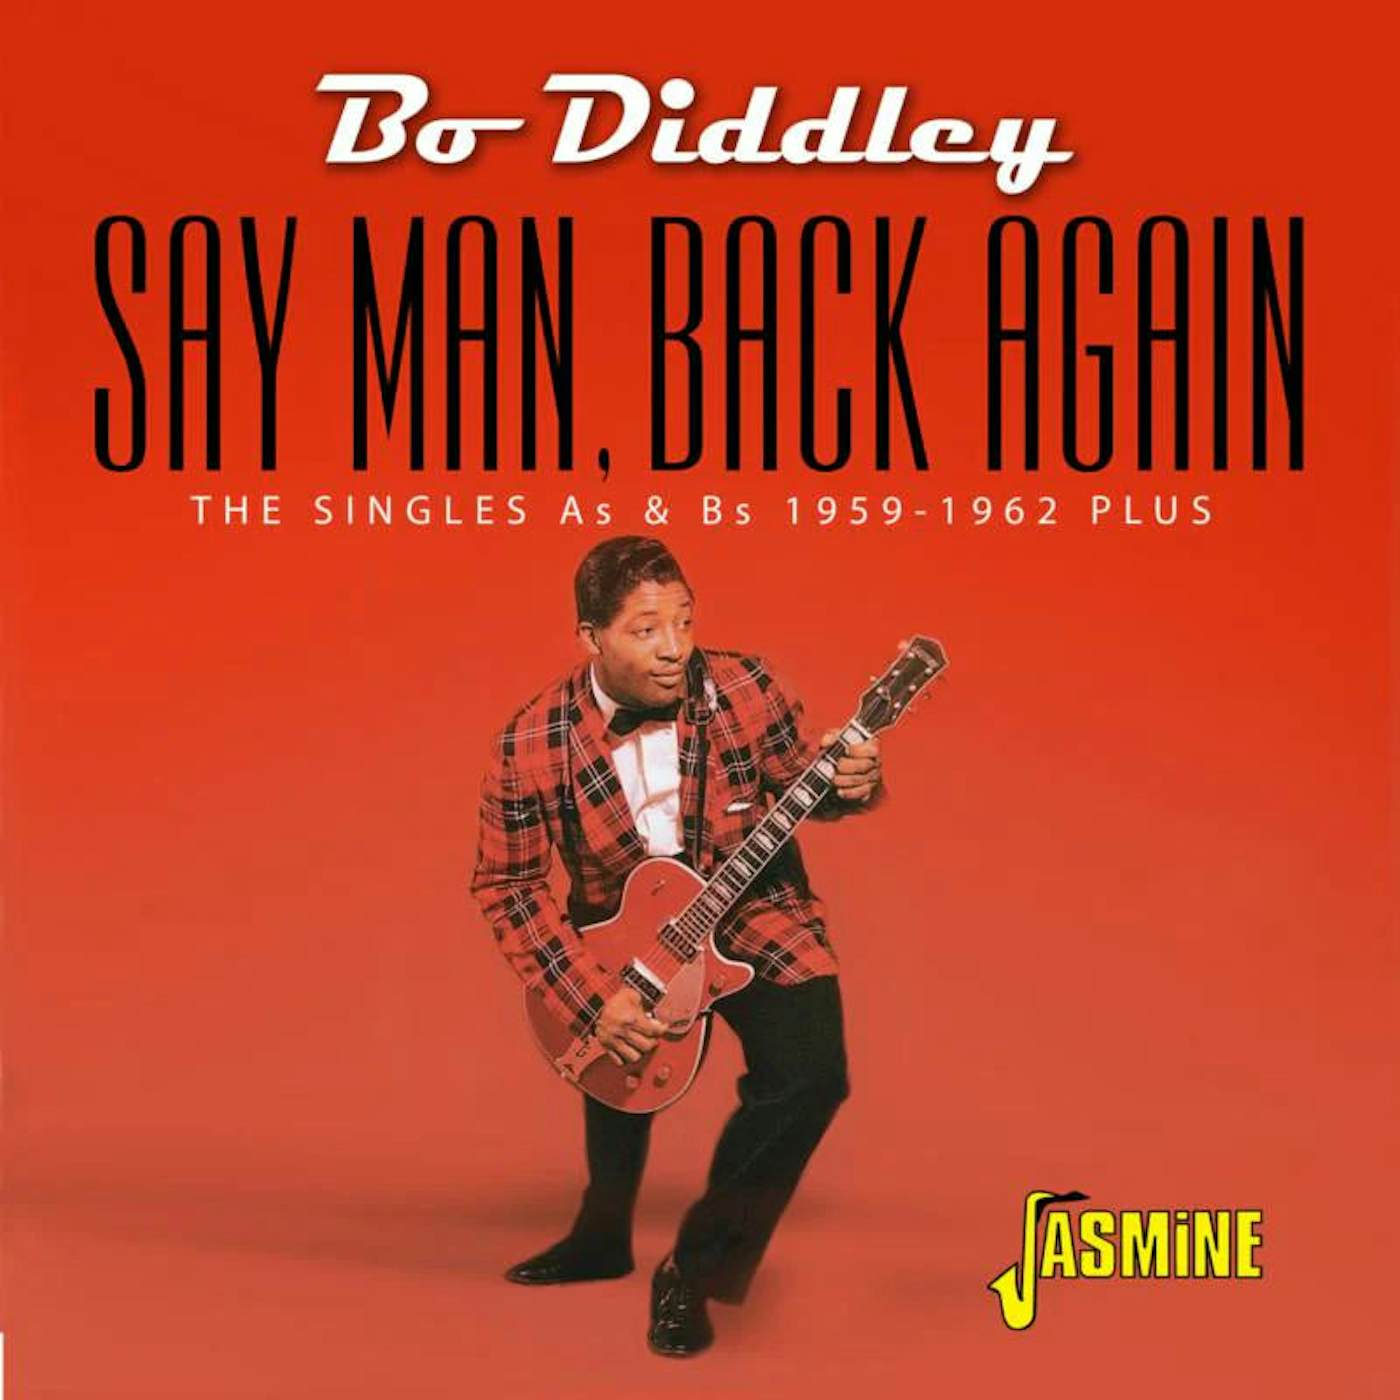 Bo Diddley CD - Say Man  Back Again